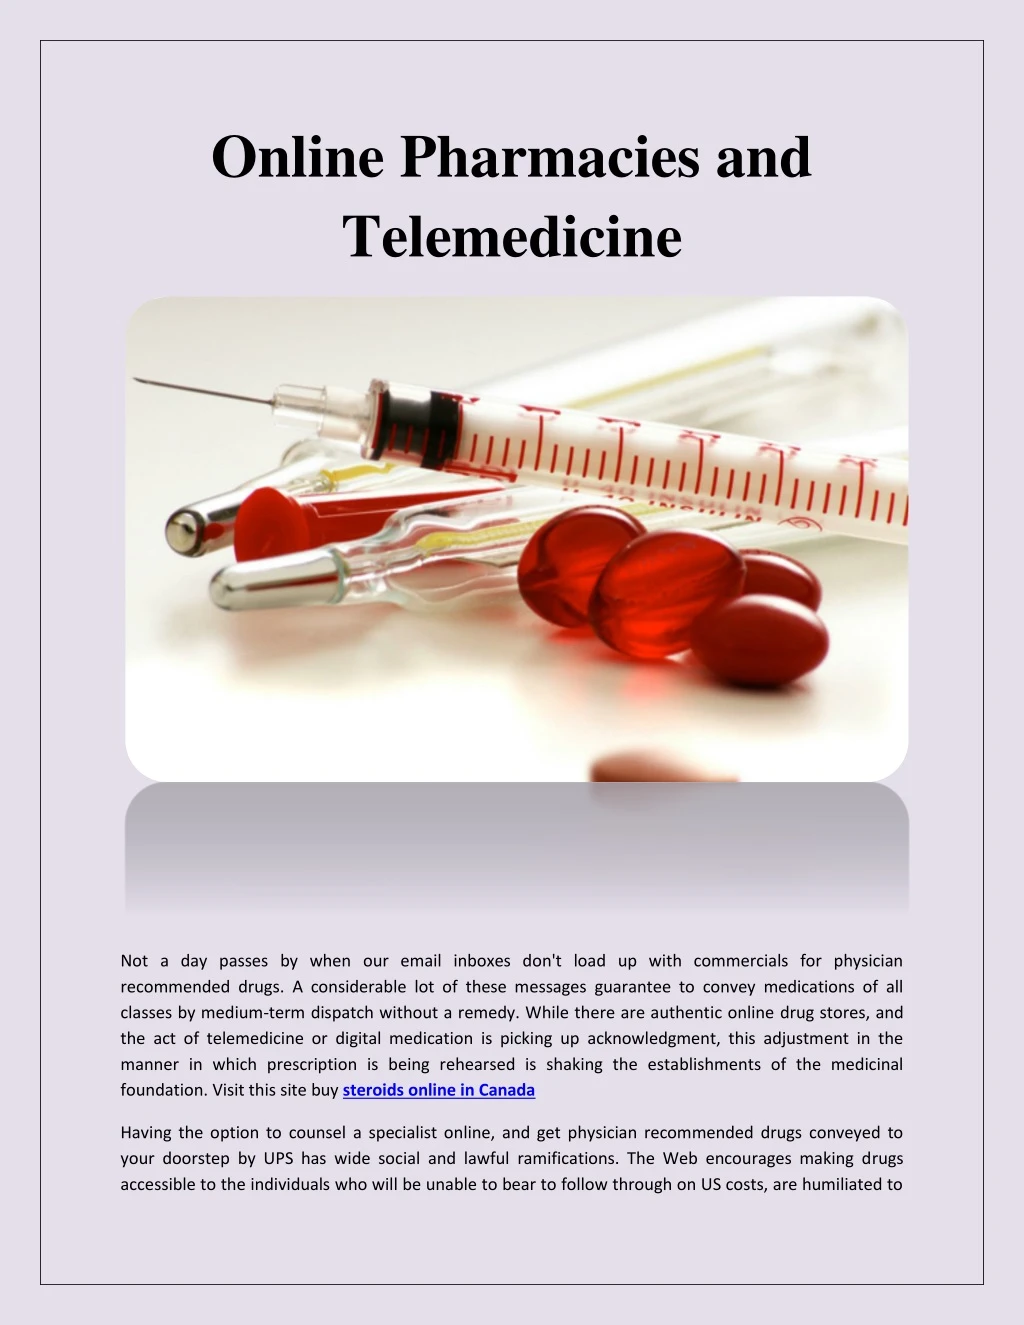 online pharmacies and telemedicine